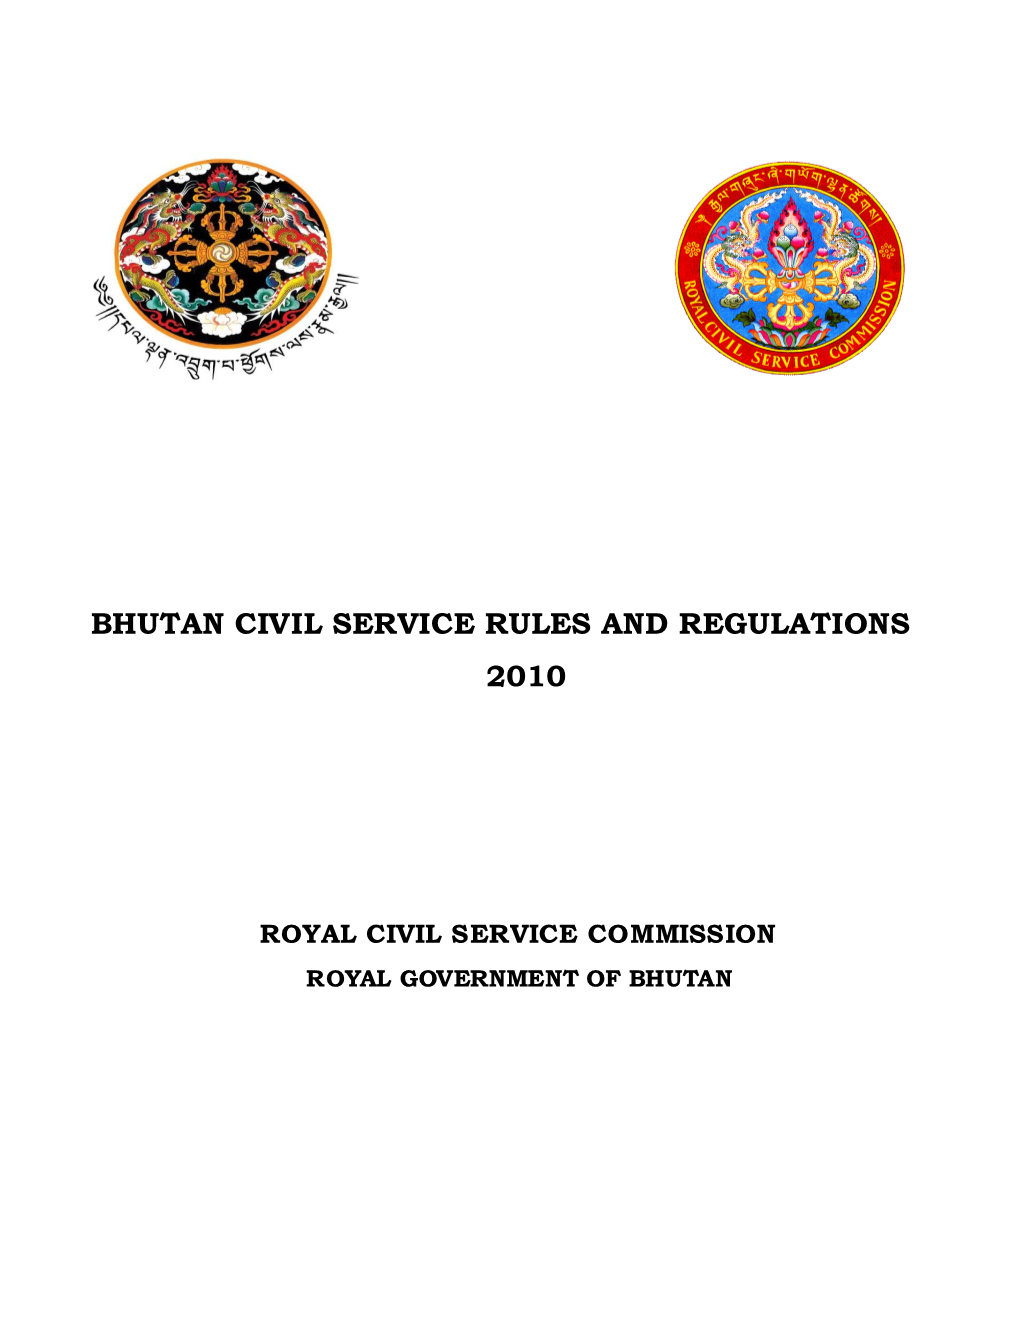 Bhutan Civil Service Rules and Regulations 2010